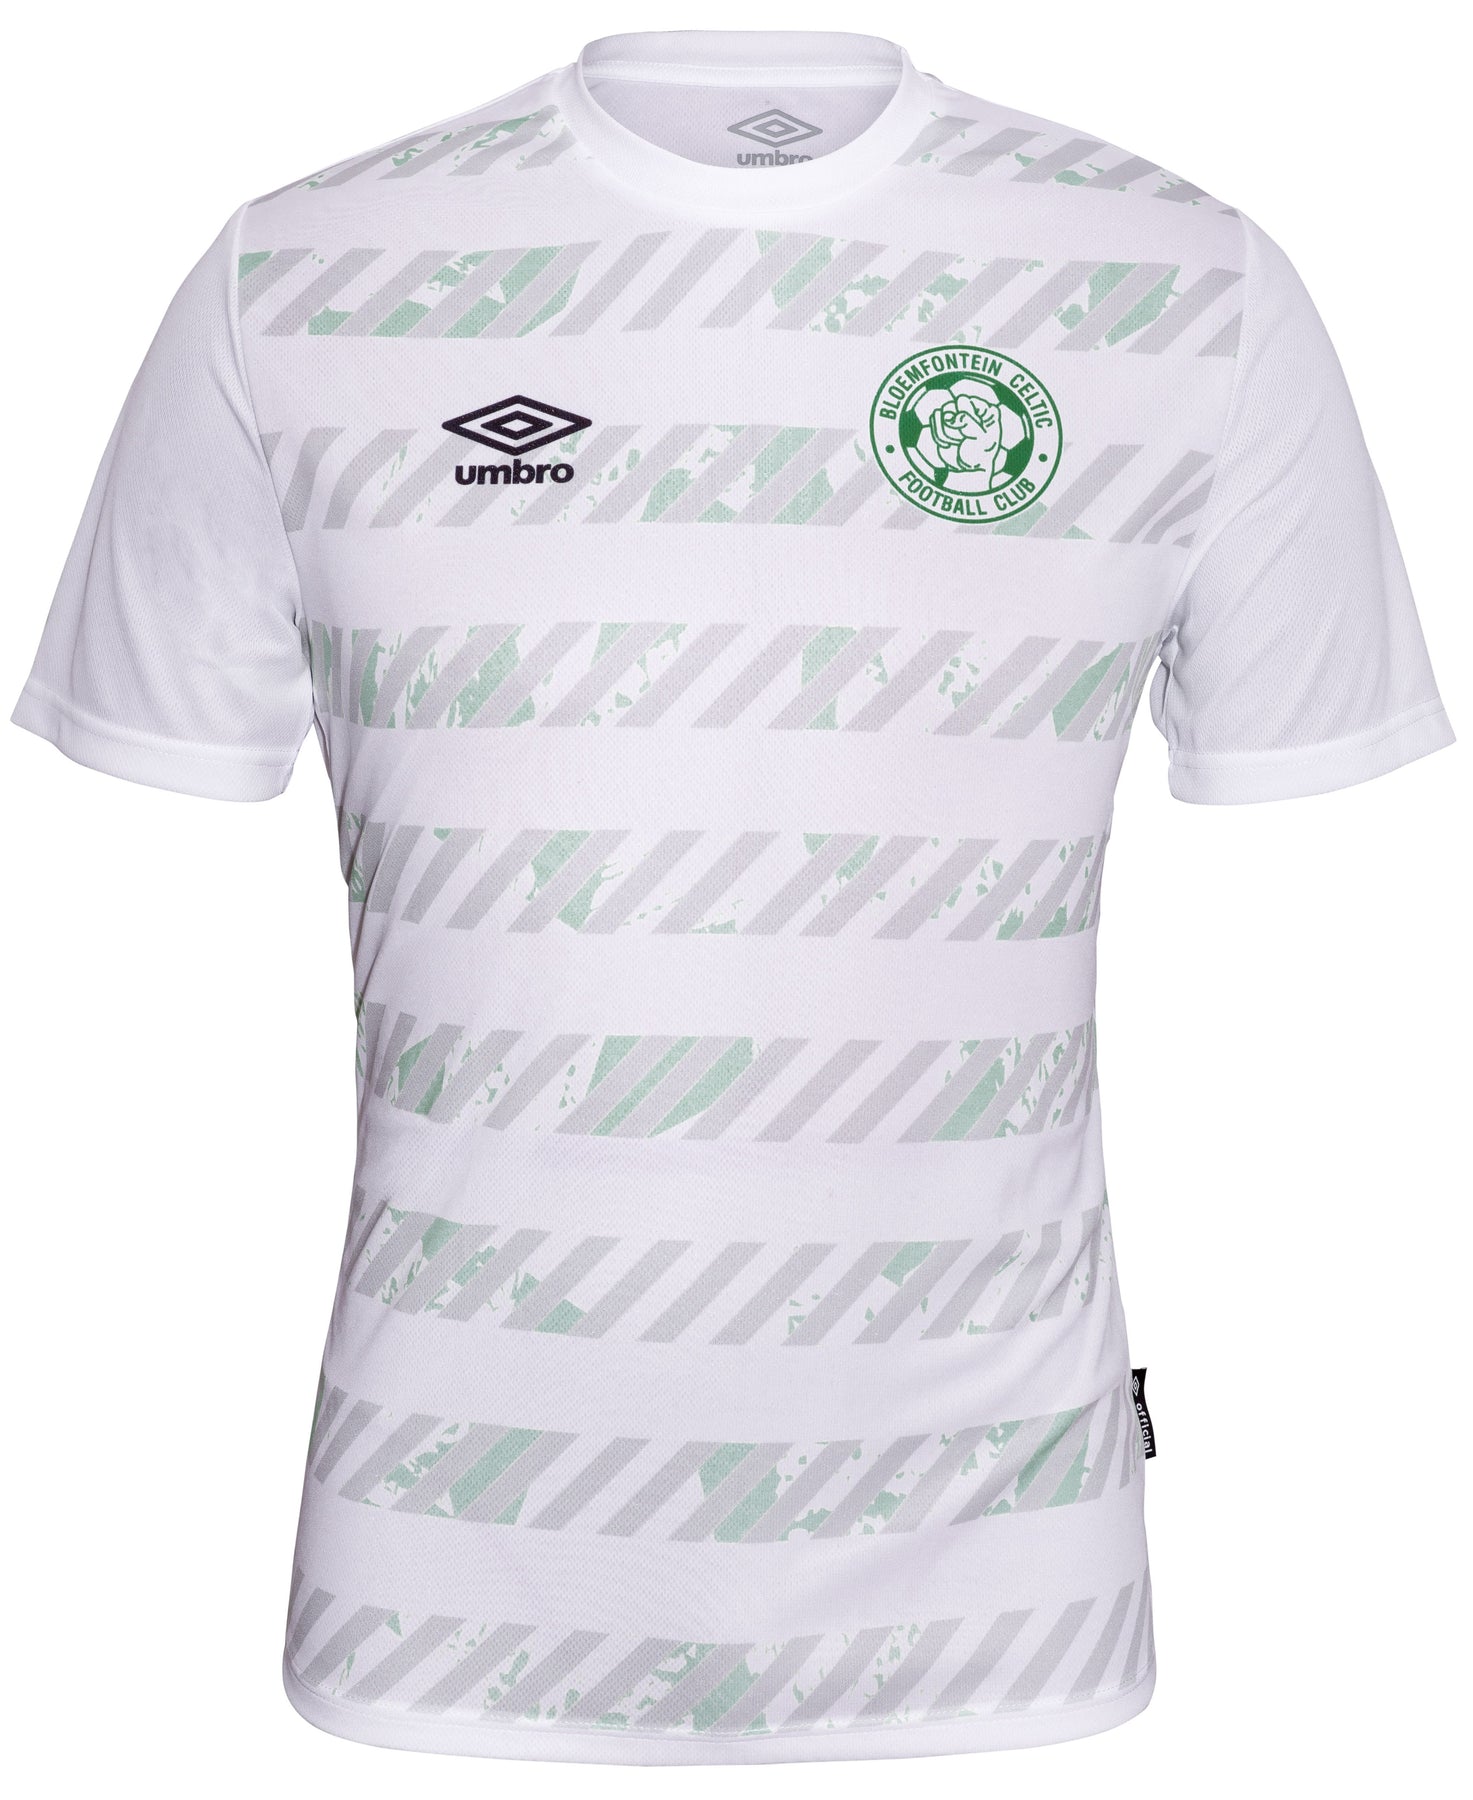 Celtic Football Shirts, Home & Away Kit